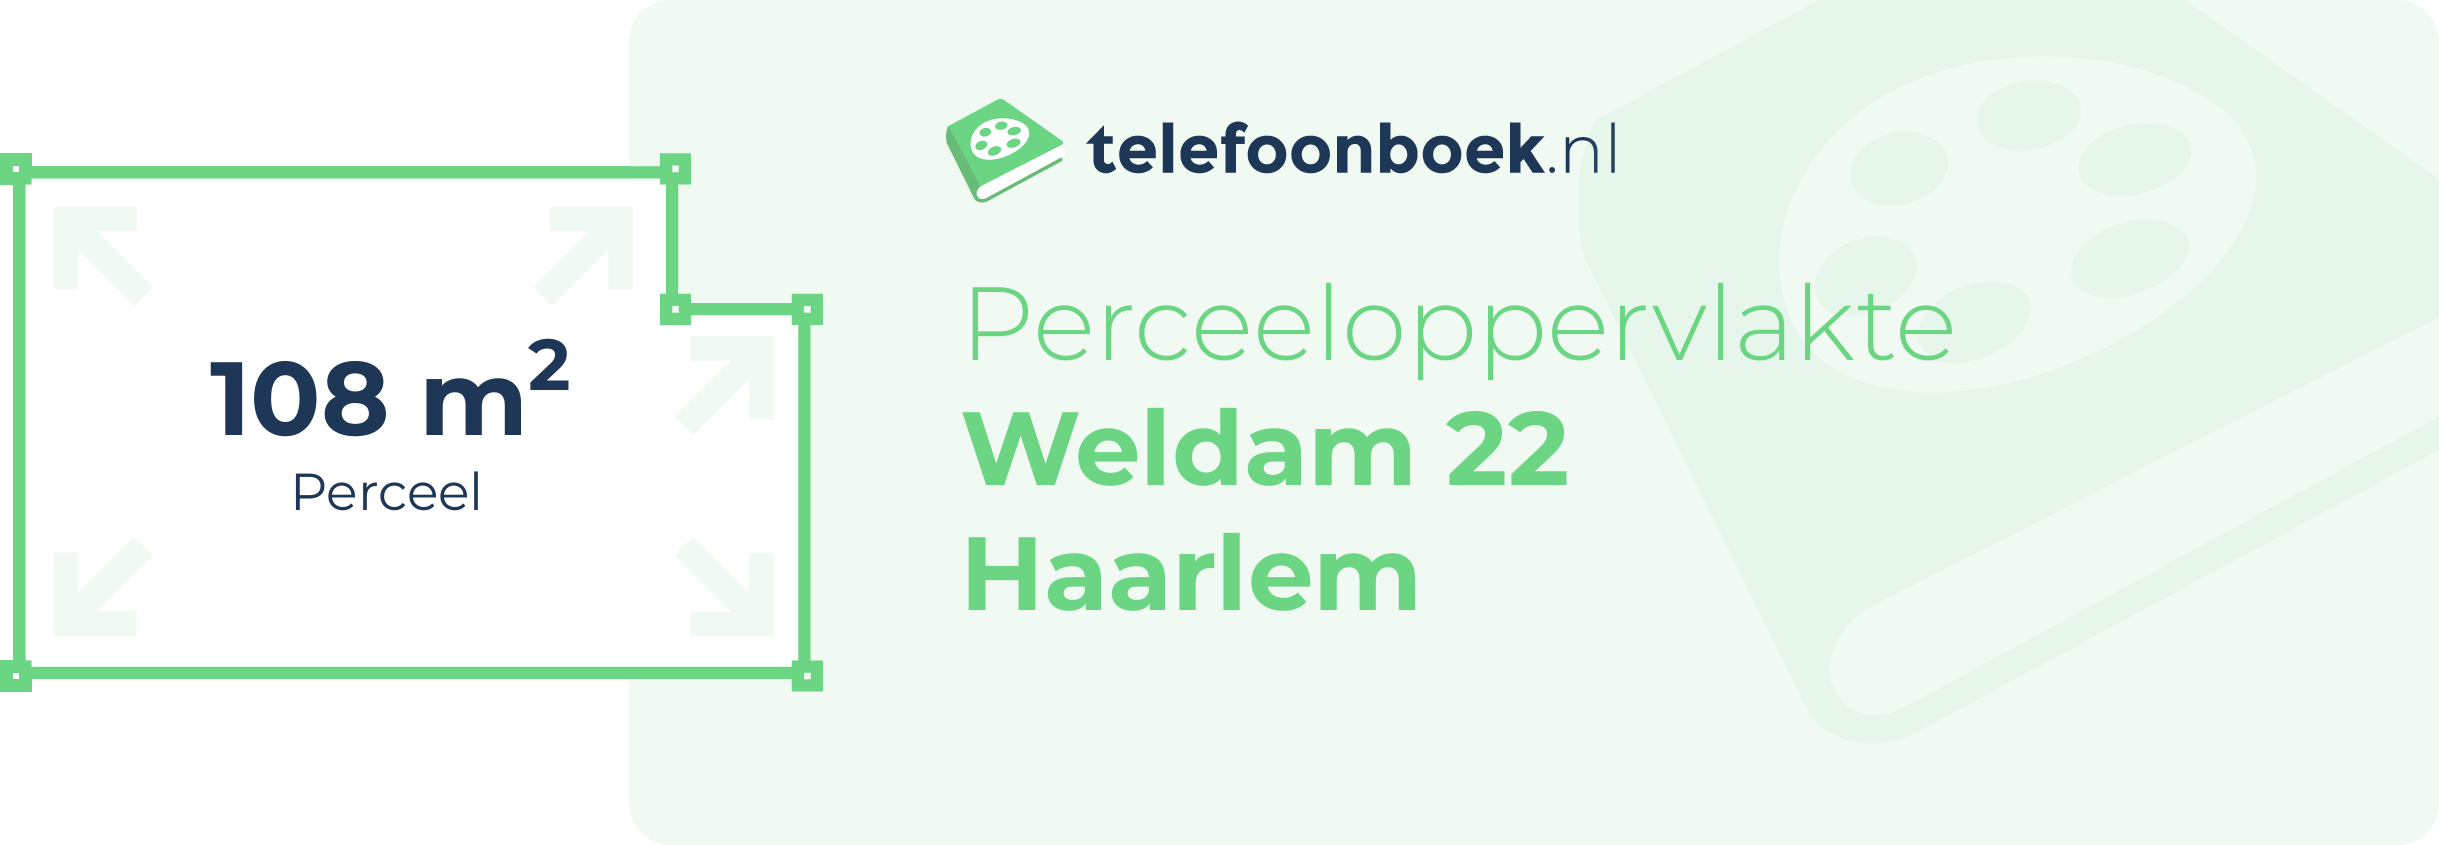 Perceeloppervlakte Weldam 22 Haarlem